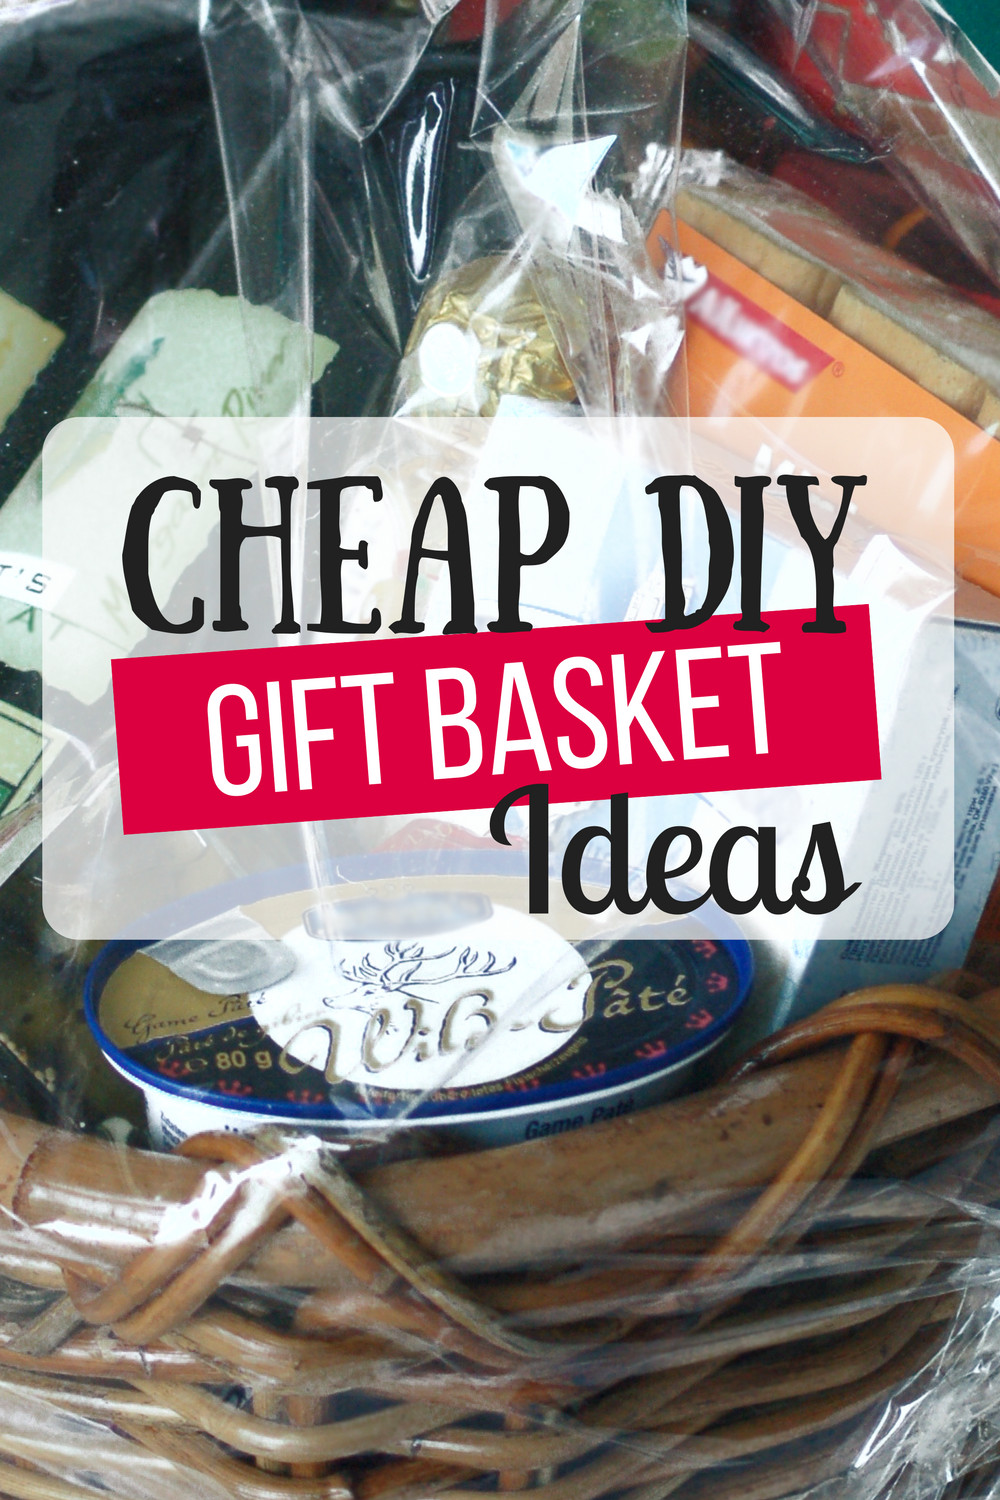 Gift Basket Diy Ideas
 Cheap DIY Gift Baskets The Busy Bud er